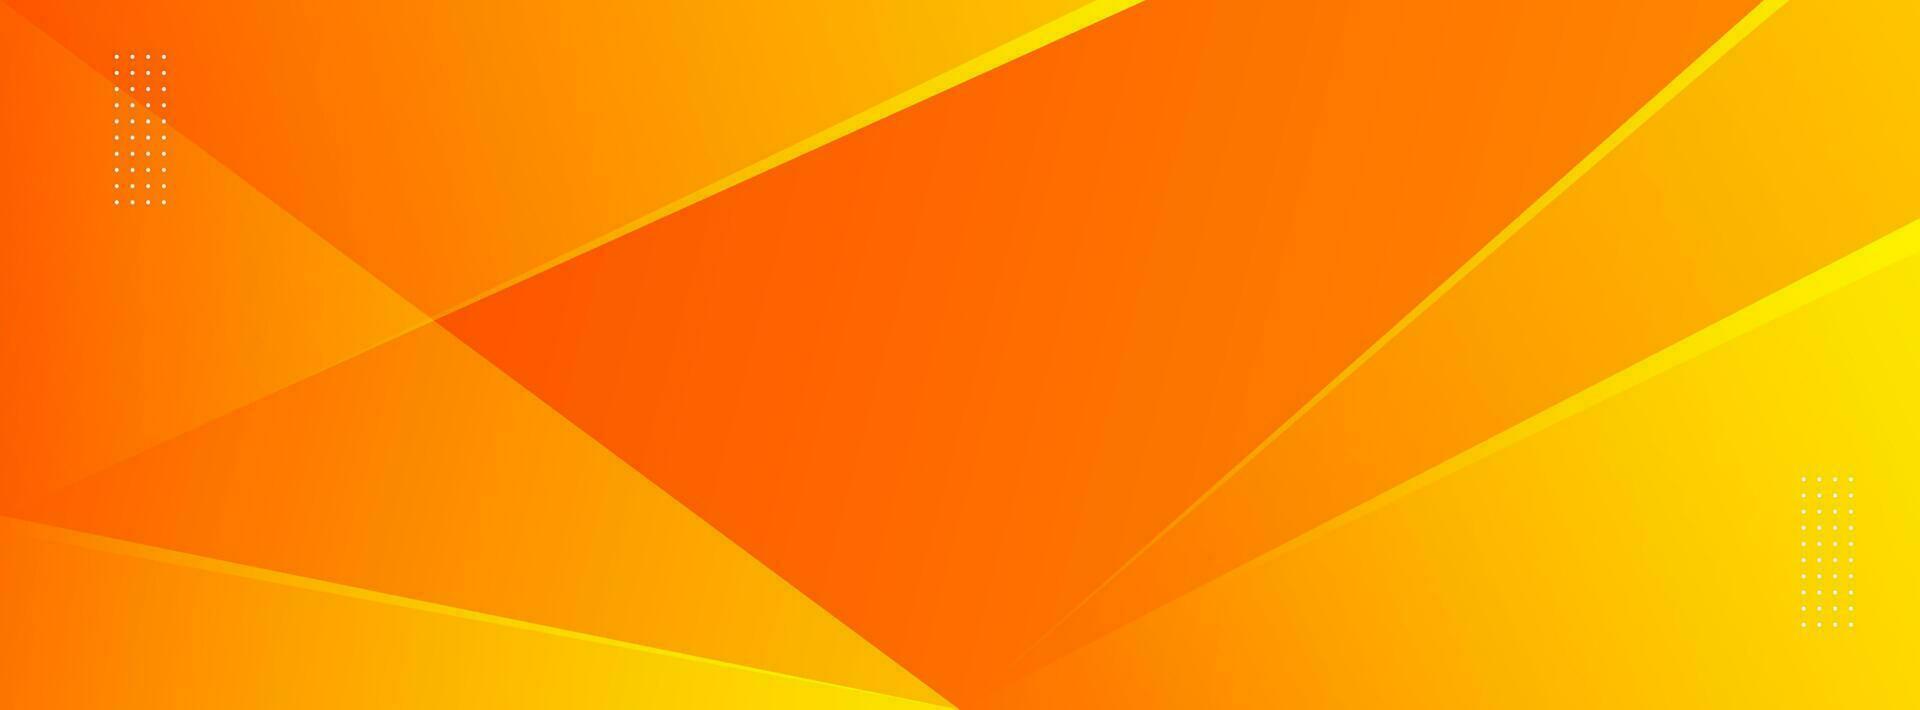 anner bakgrund. färgrik, orange ljus gradering, korsa linje, memphis vektor